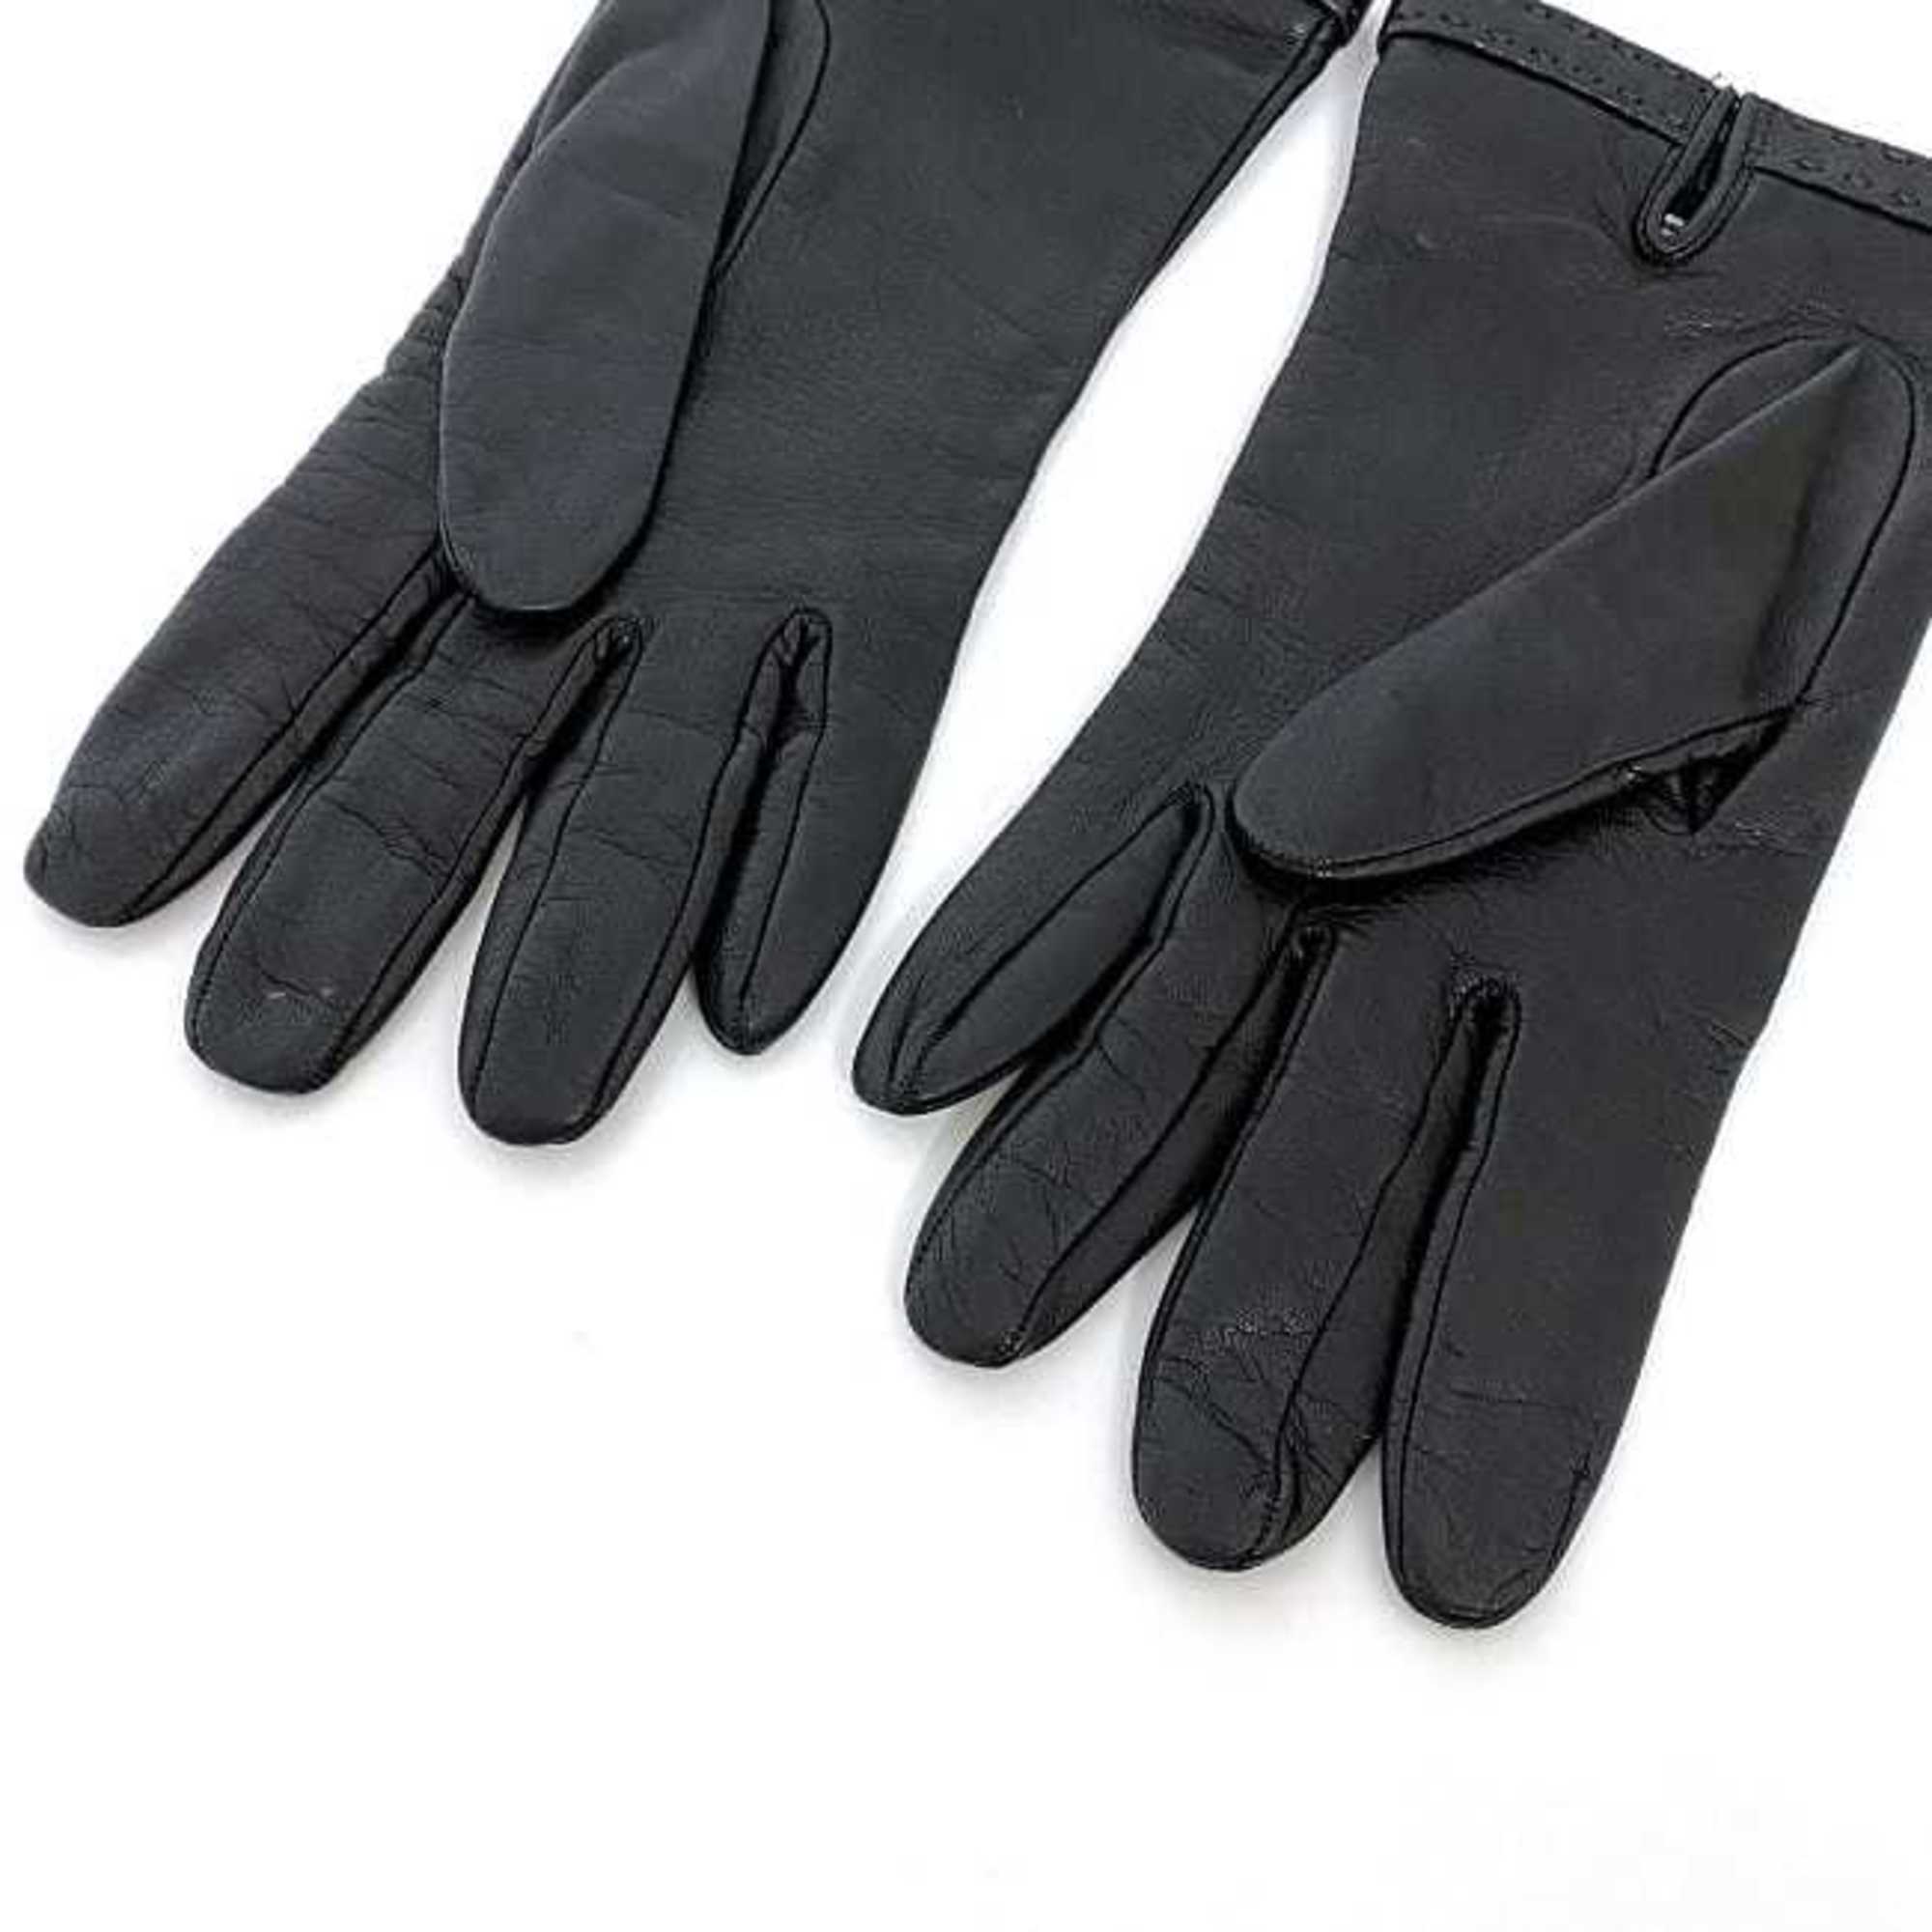 Prada Gloves Black NERO 1GG746 Size 8 Leather PRADA Triangle Plate